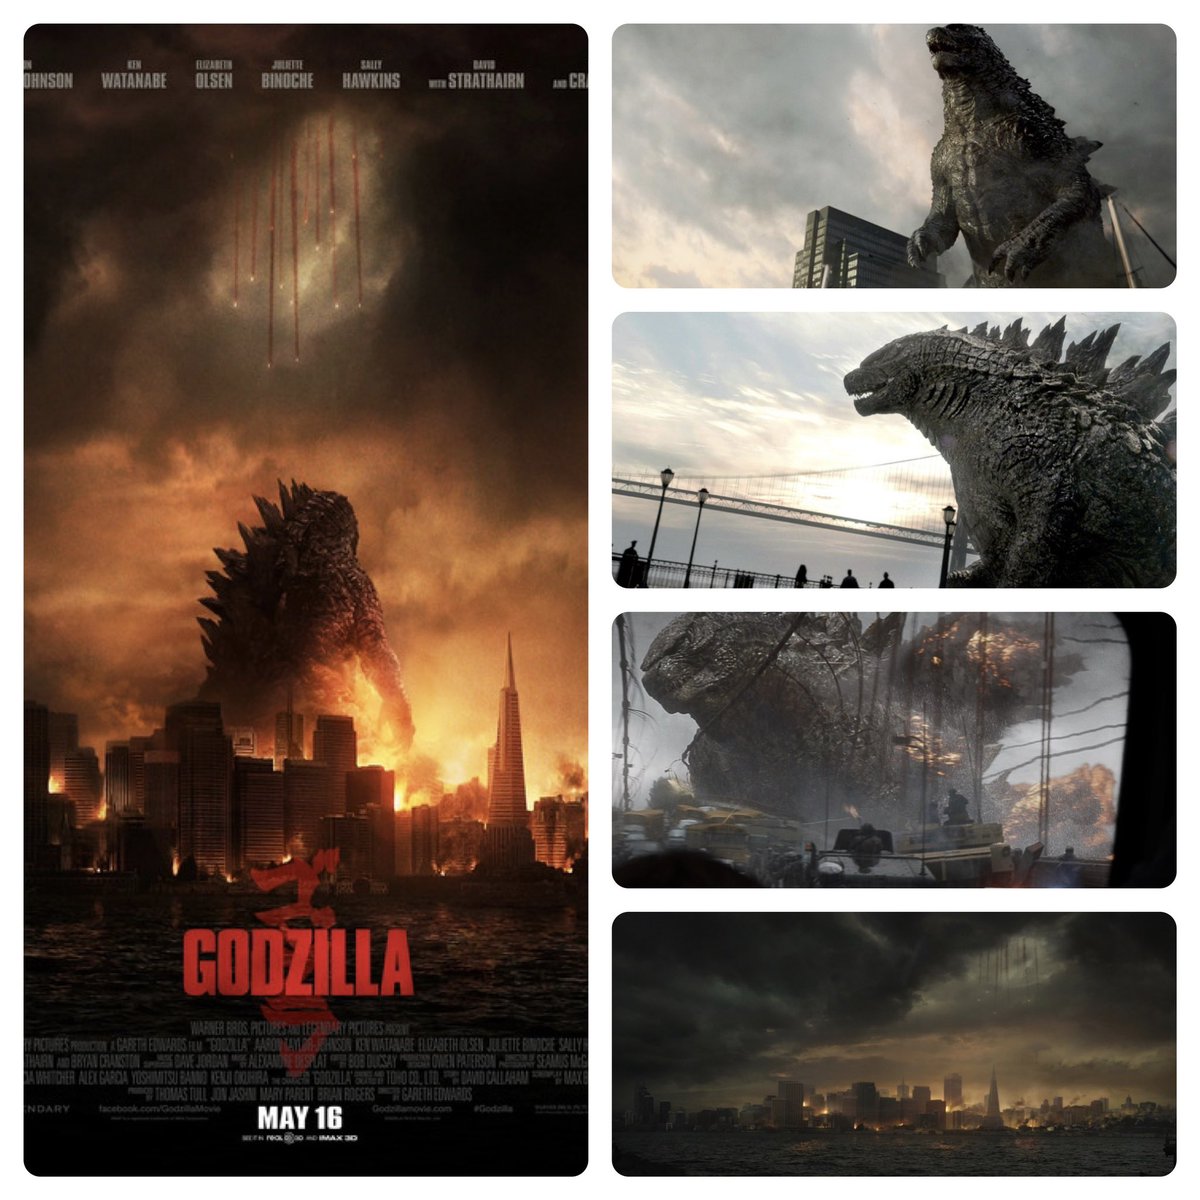 Godzilla celebrates it's 9th anniversary today
#godzilla #godzillamovie #godzilla2014 #godzillafan #monsterverse #toho #warnerbros #warnerbrosstudios #warnerbrospictures  #warnerstudios #legendarypictures #garethedwards #monstermovies #scifimovie #scififilms #sciencefictionmovies